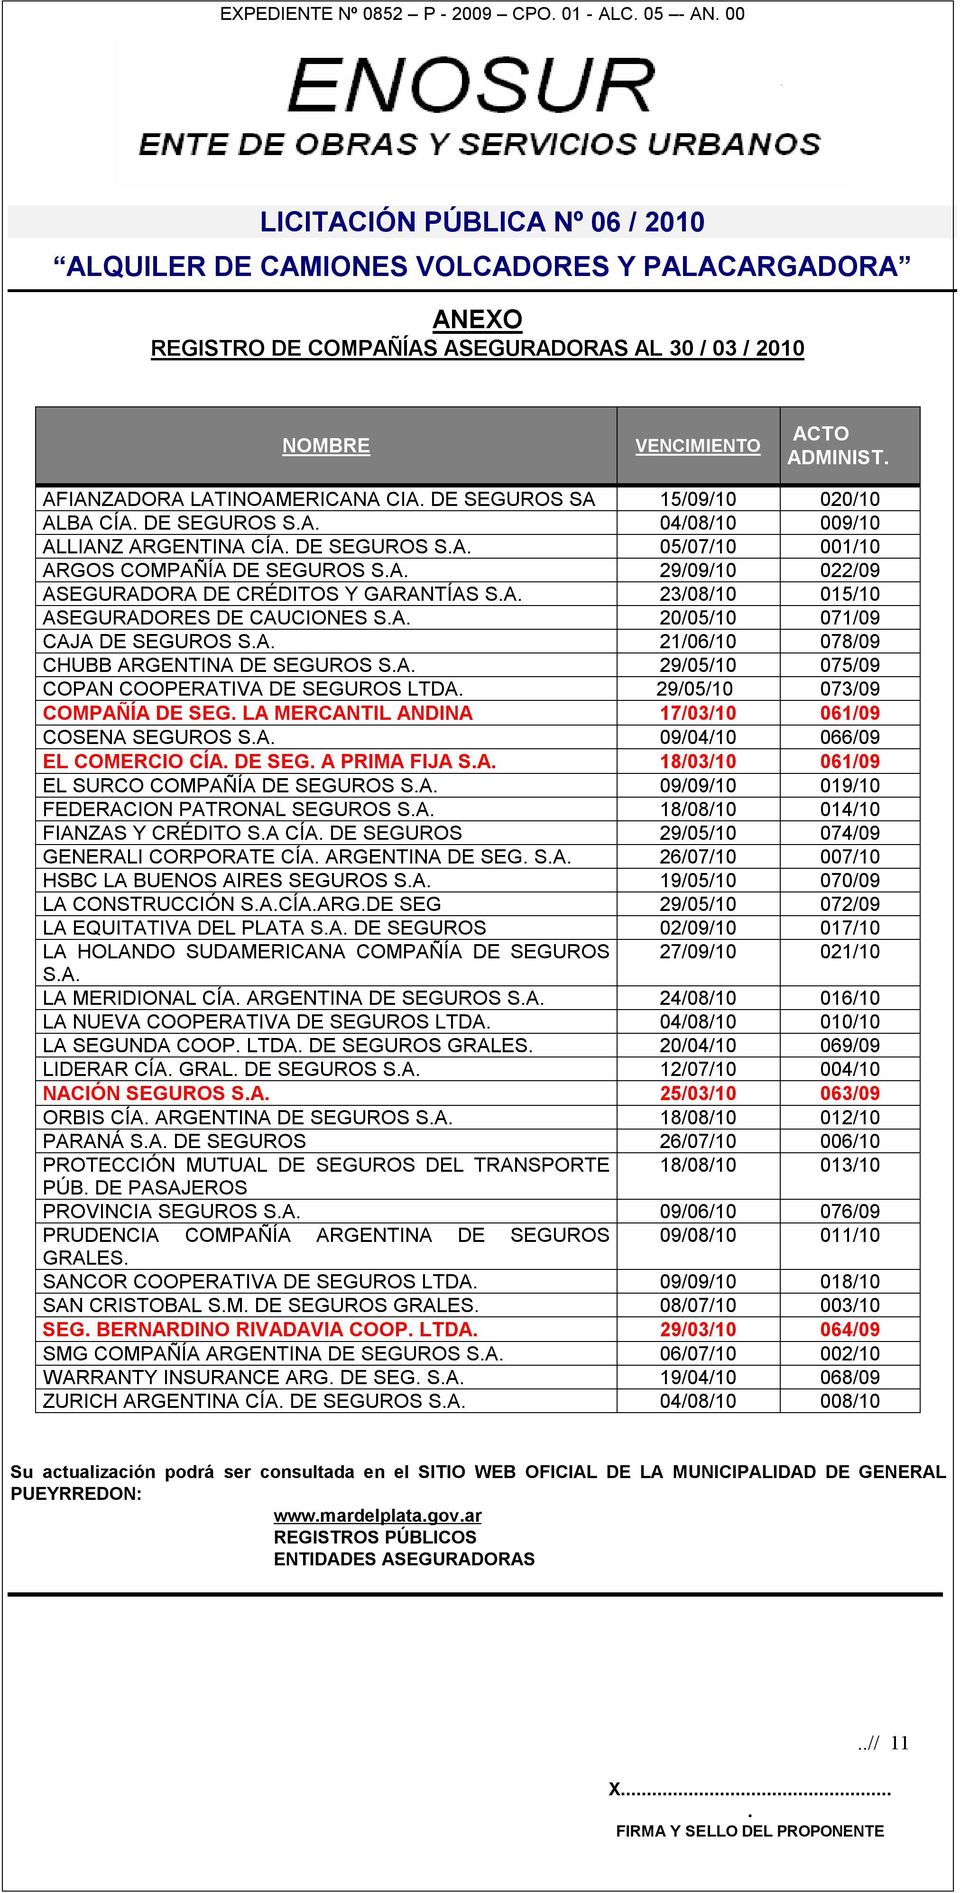 A. 23/08/10 015/10 ASEGURADORES DE CAUCIONES S.A. 20/05/10 071/09 CAJA DE SEGUROS S.A. 21/06/10 078/09 CHUBB ARGENTINA DE SEGUROS S.A. 29/05/10 075/09 COPAN COOPERATIVA DE SEGUROS LTDA.